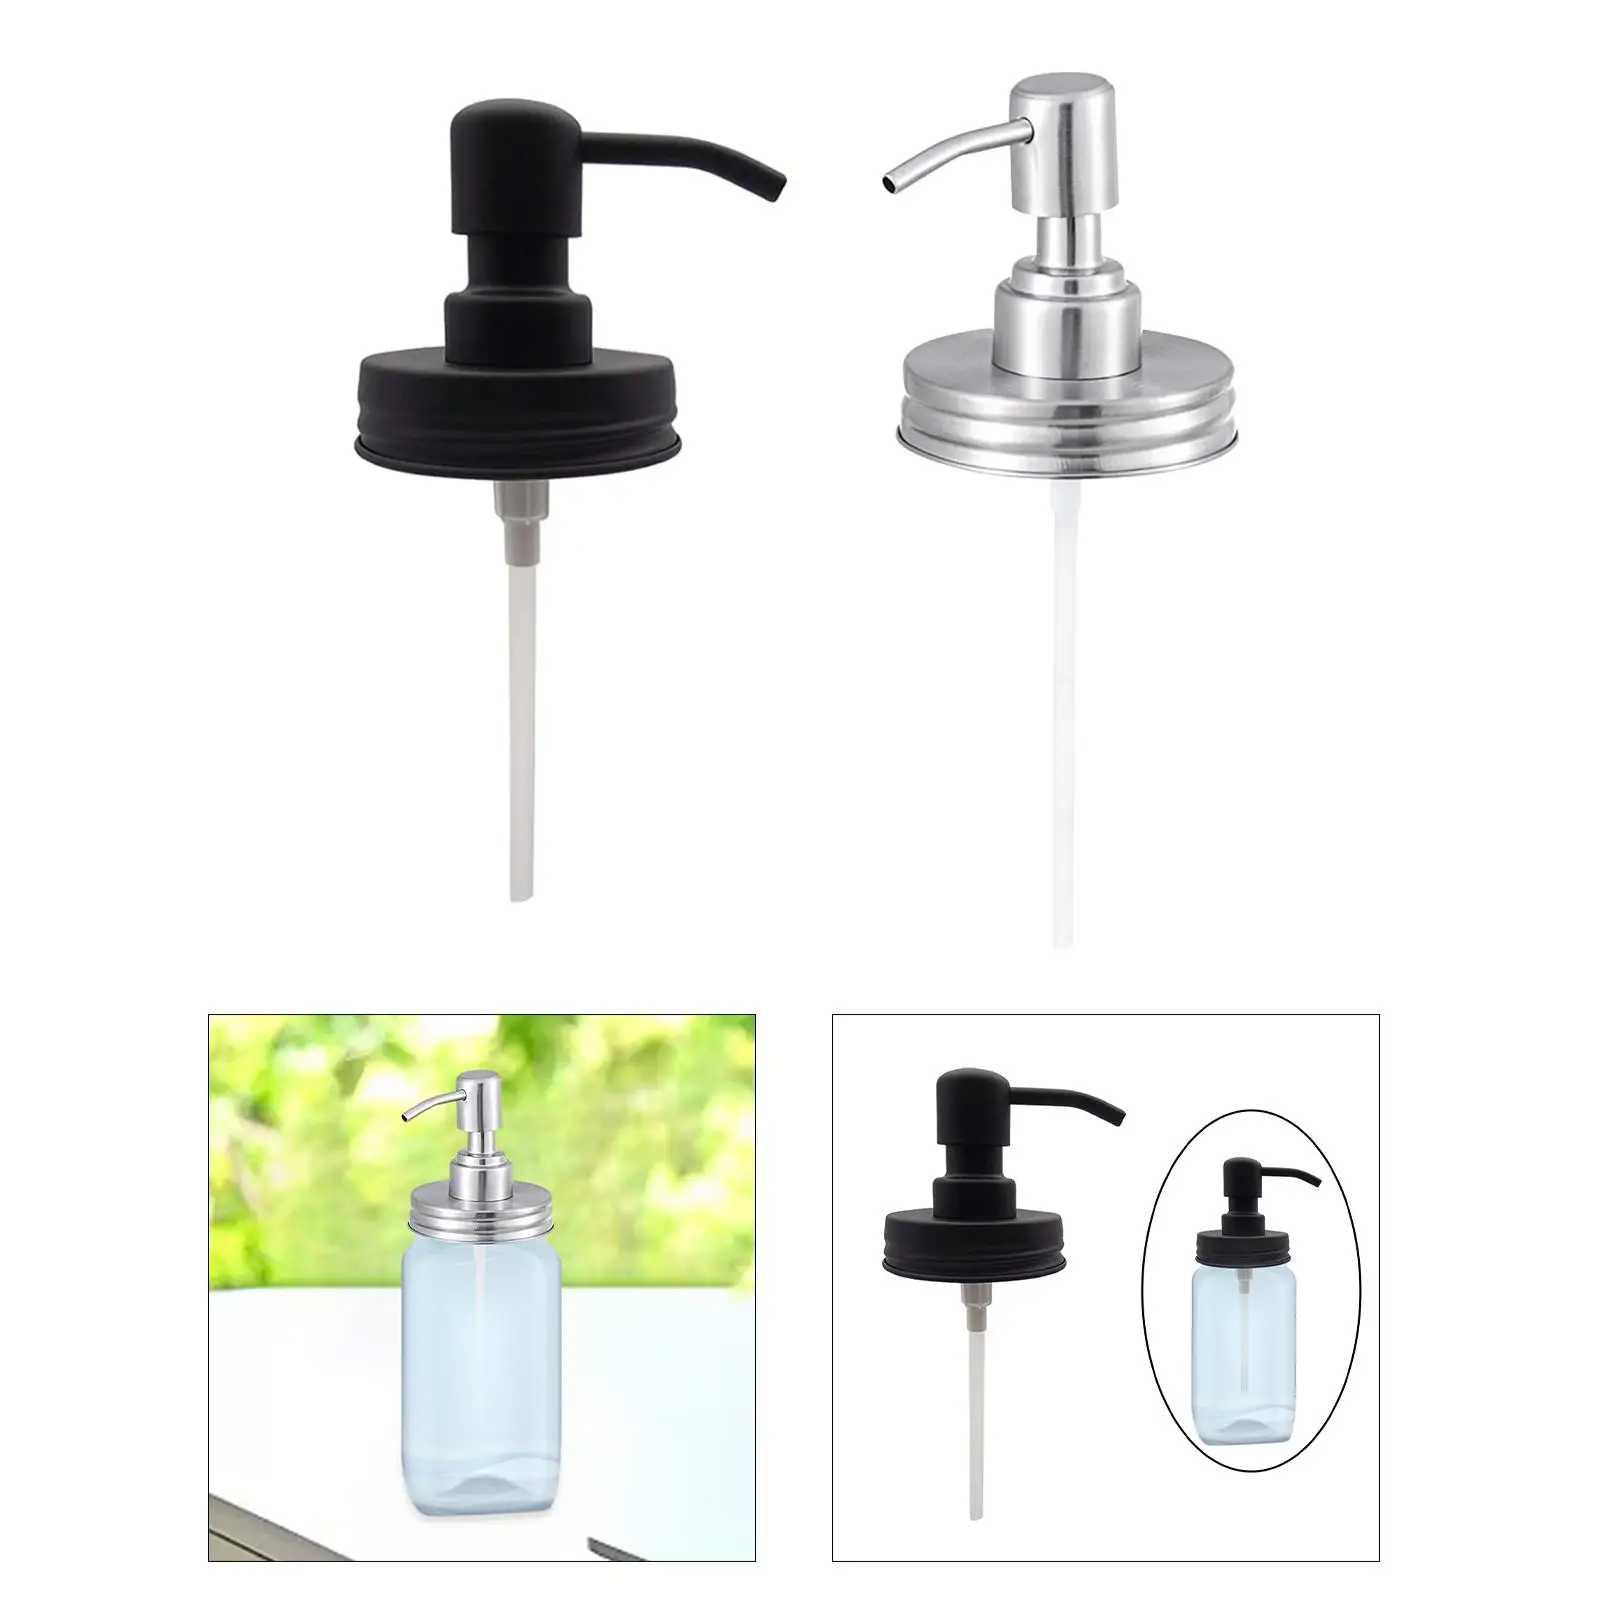 Metal Pump Head, Rust Proof, Soap Dispenser Pump ,Replacement, for Bathroom Countertop Kitchen Sink Accessories Parts